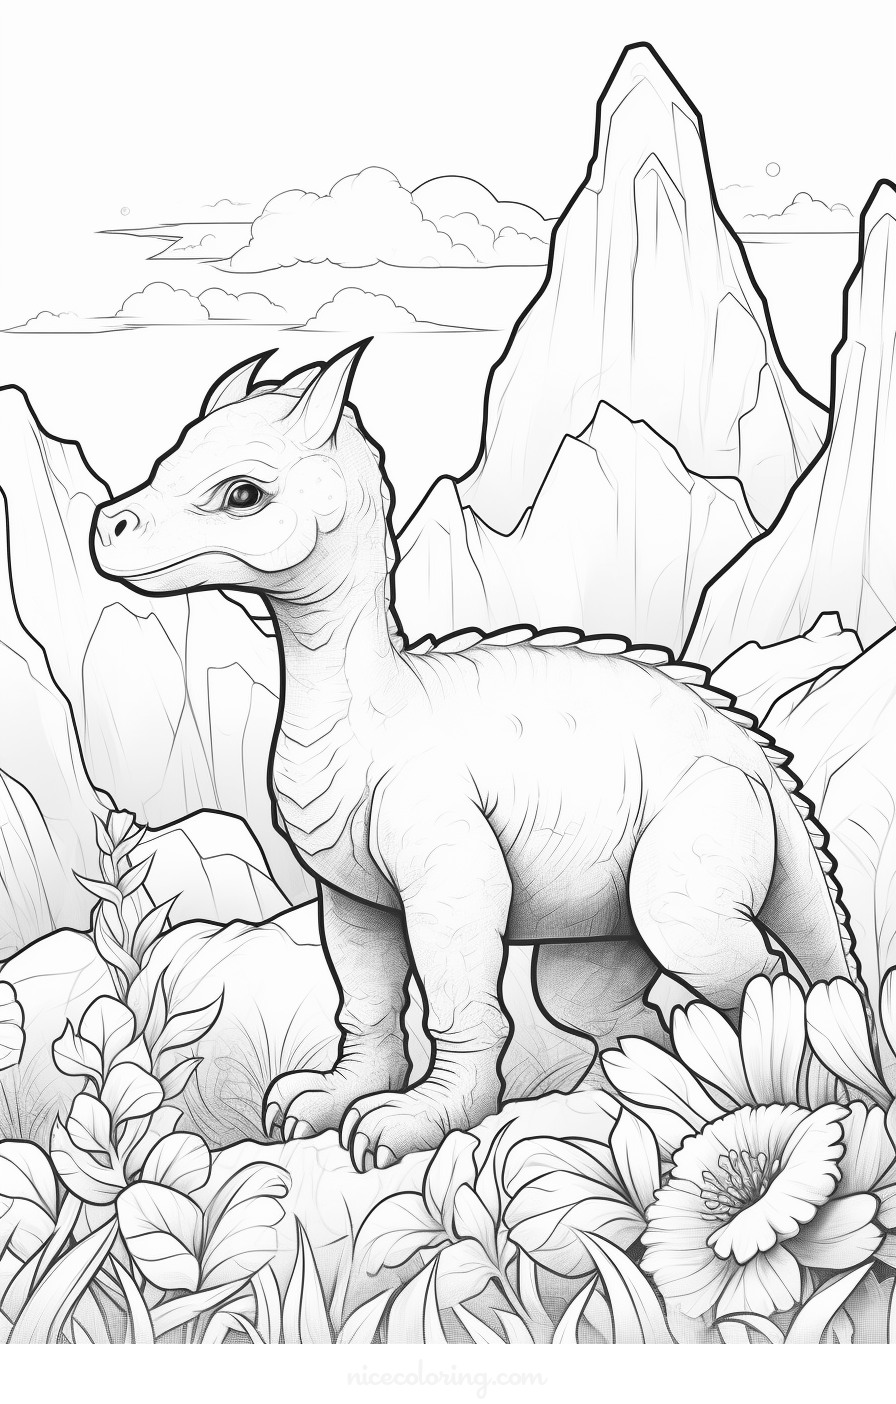 Dinosaur in a prehistoric landscape coloring